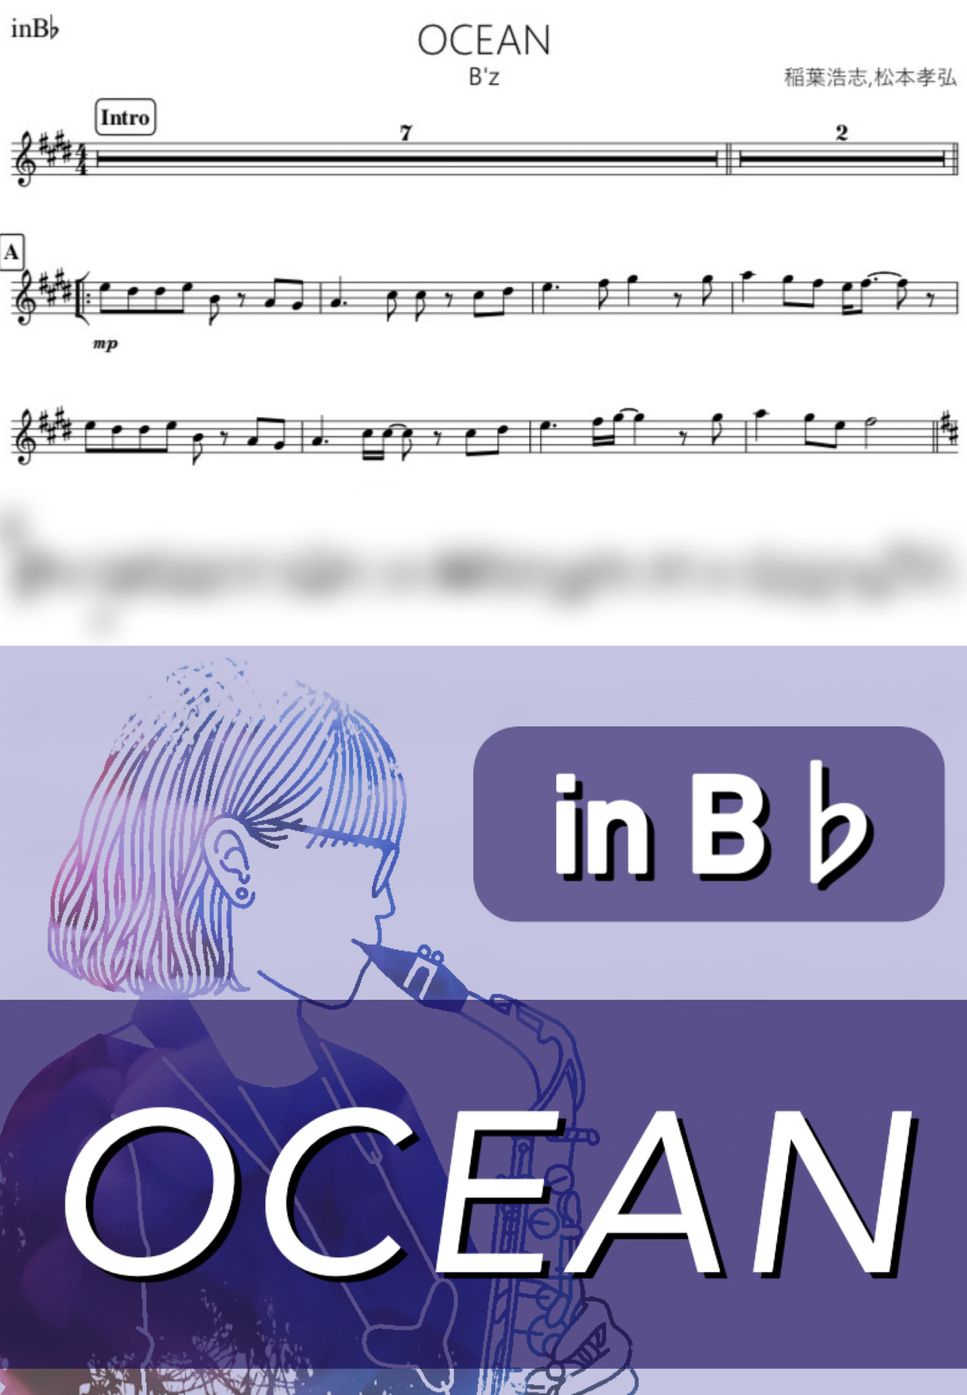 B'z - OCEAN (B♭) by kanamusic